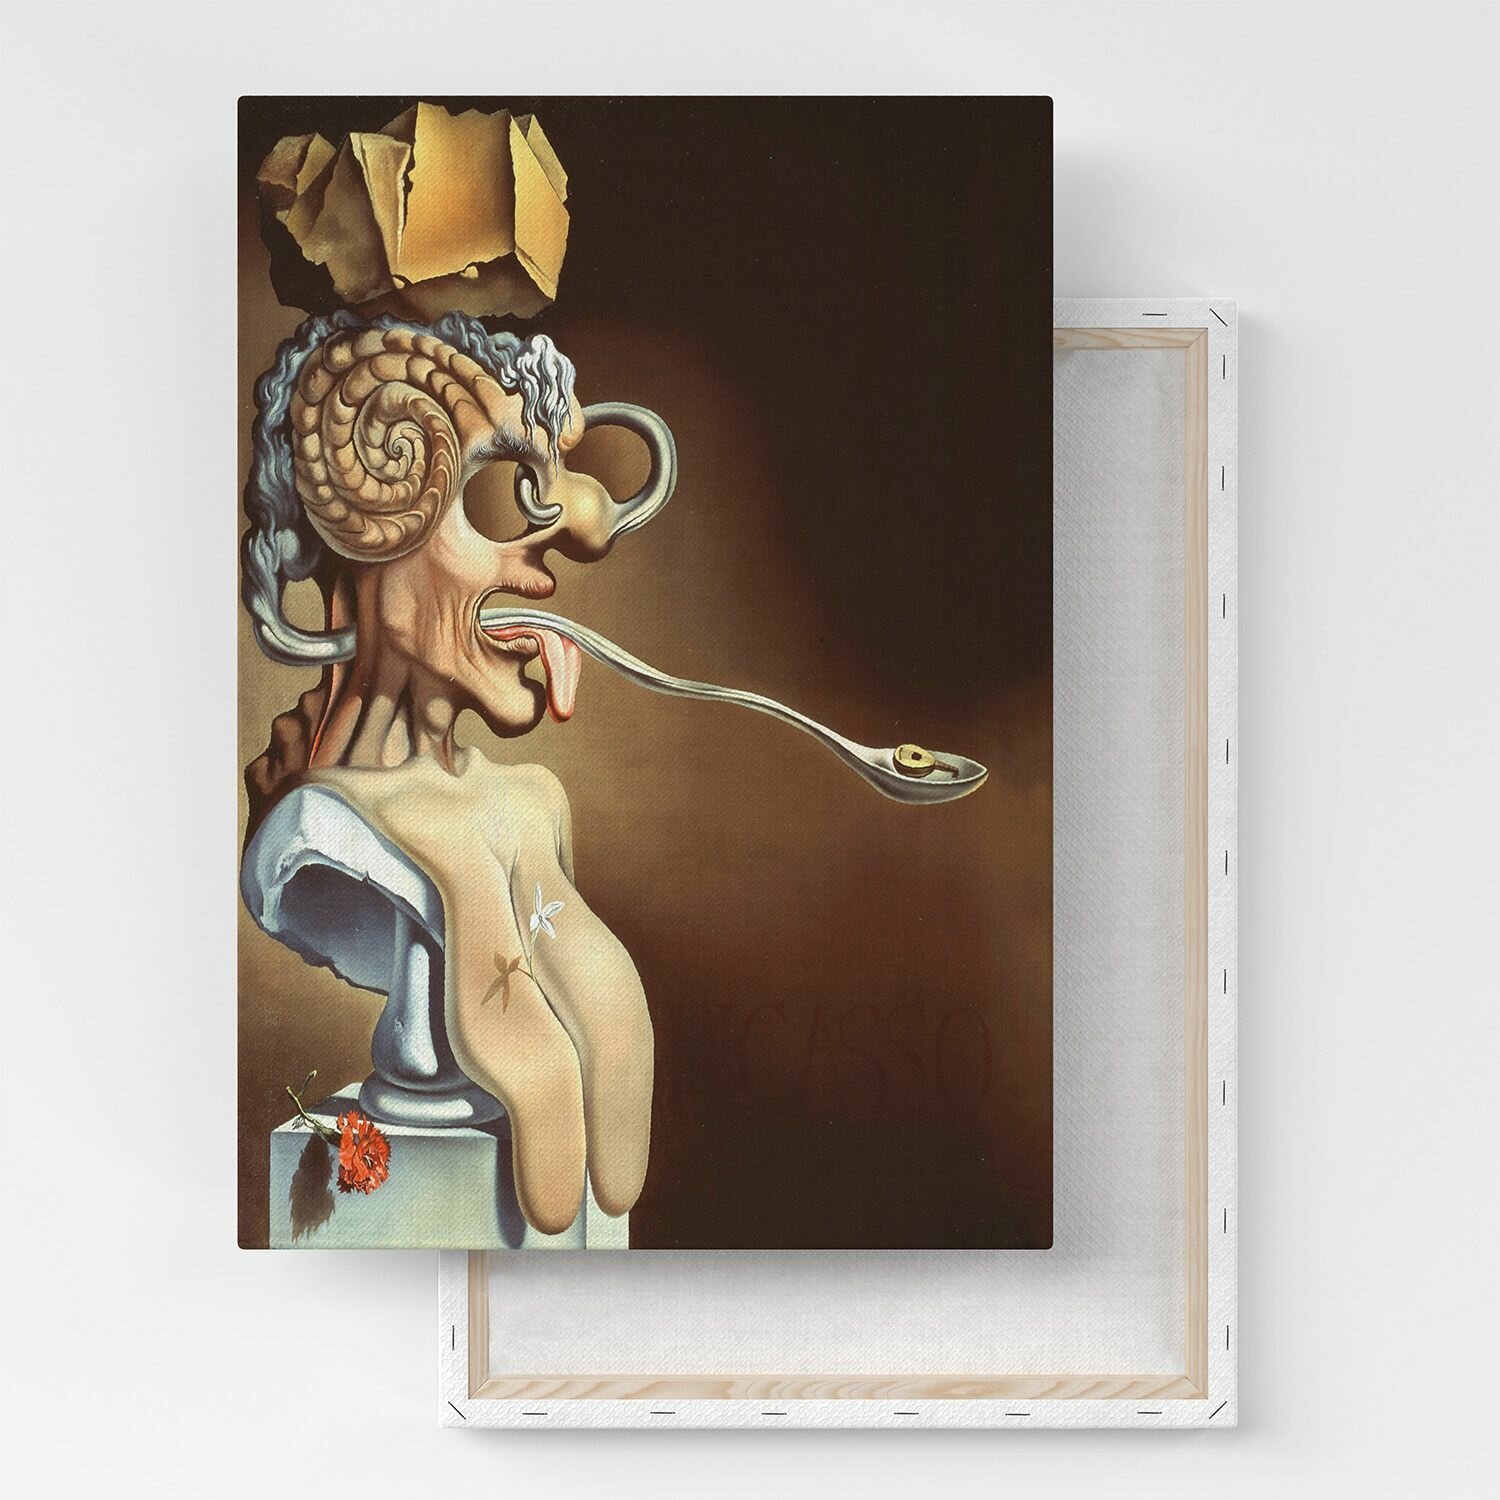 Картина на холсте, репродукция / Сальвадор Дали - Портрет Пикассо / Размер 30 x 40 см